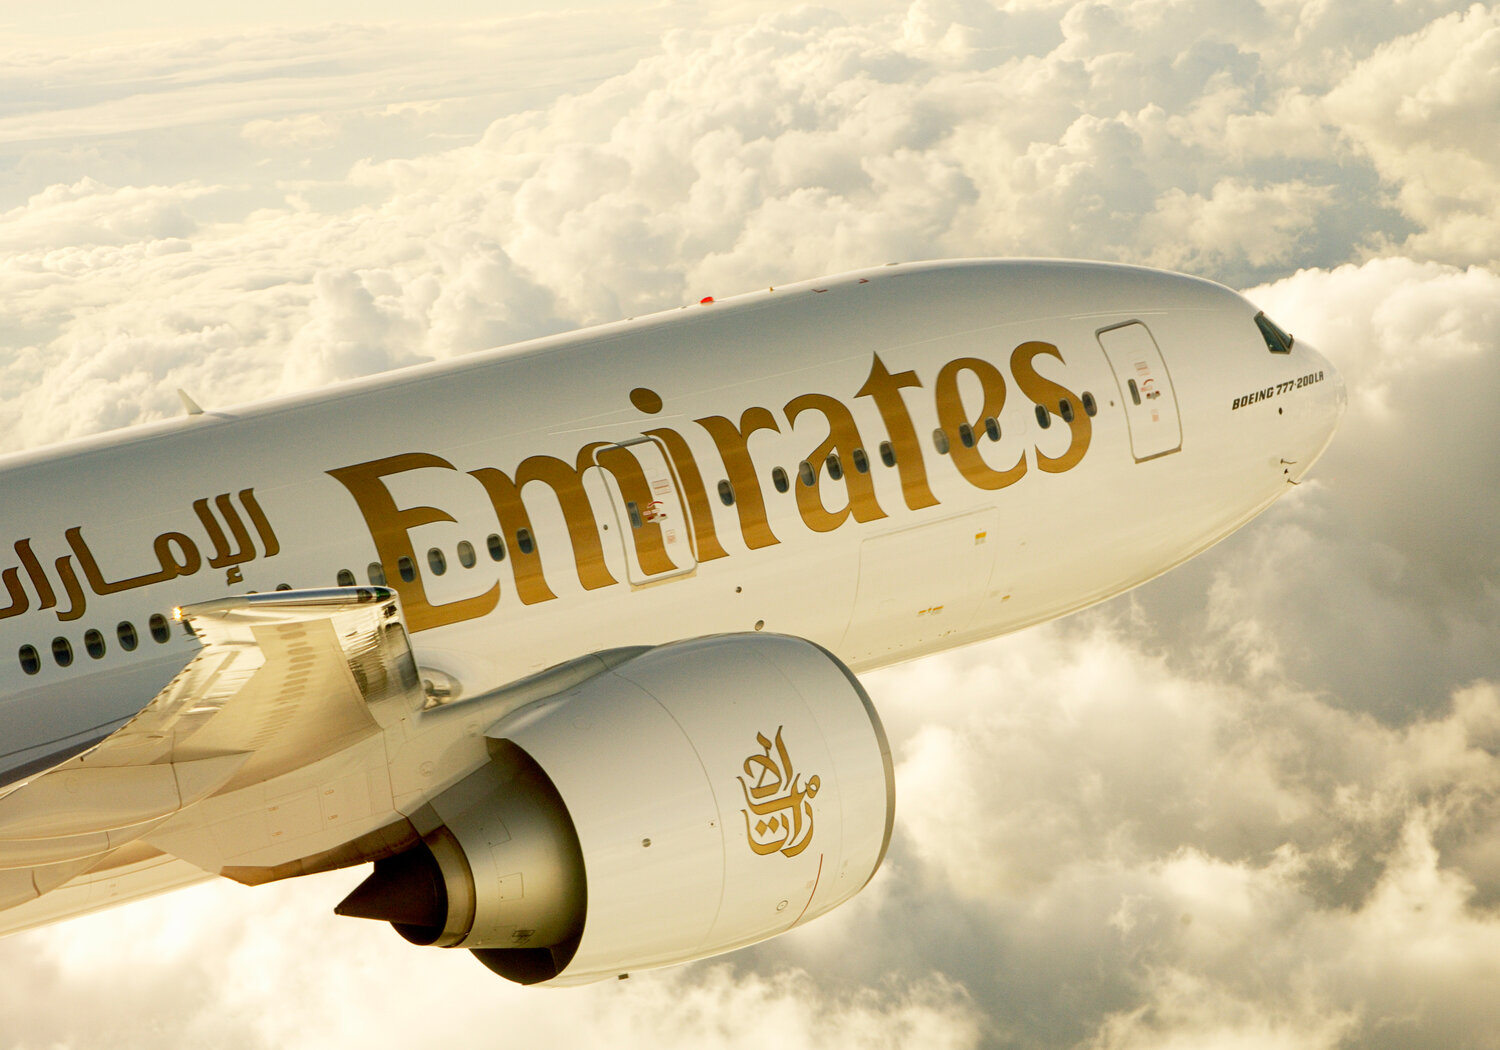 Сайт эмирейтс. Авиакомпания Дубай Эмирейтс. Самолет Дубай Эмирейтс. Боинг 777 арабские эмираты. Флай эмиратес самолет.